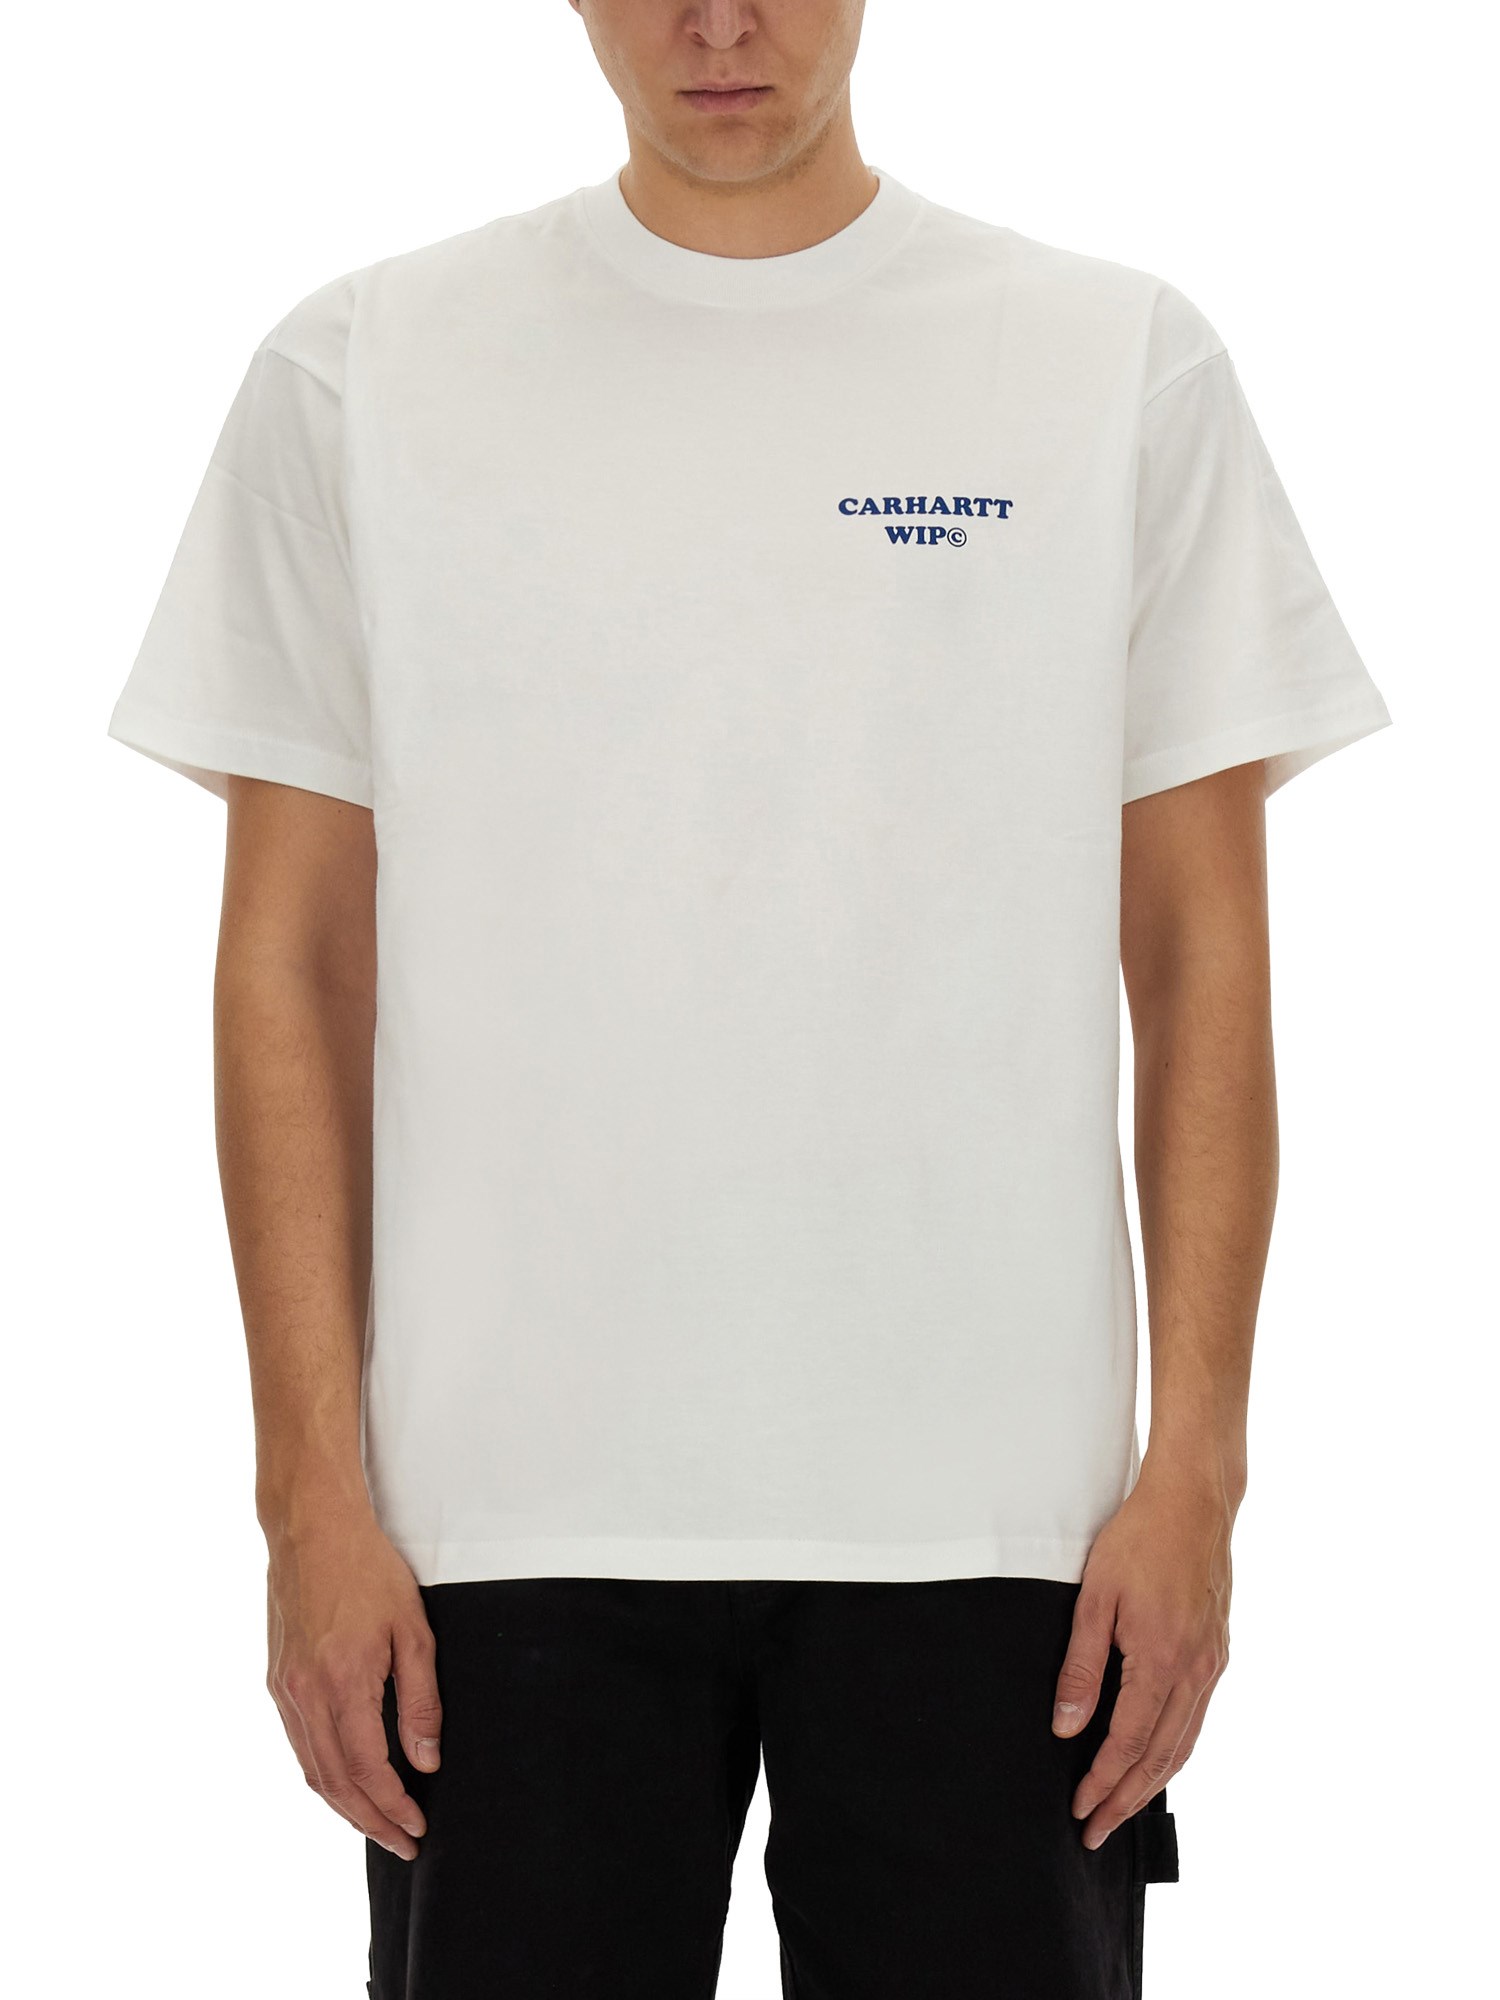 Carhartt WIP carhartt wip t-shirt with logo